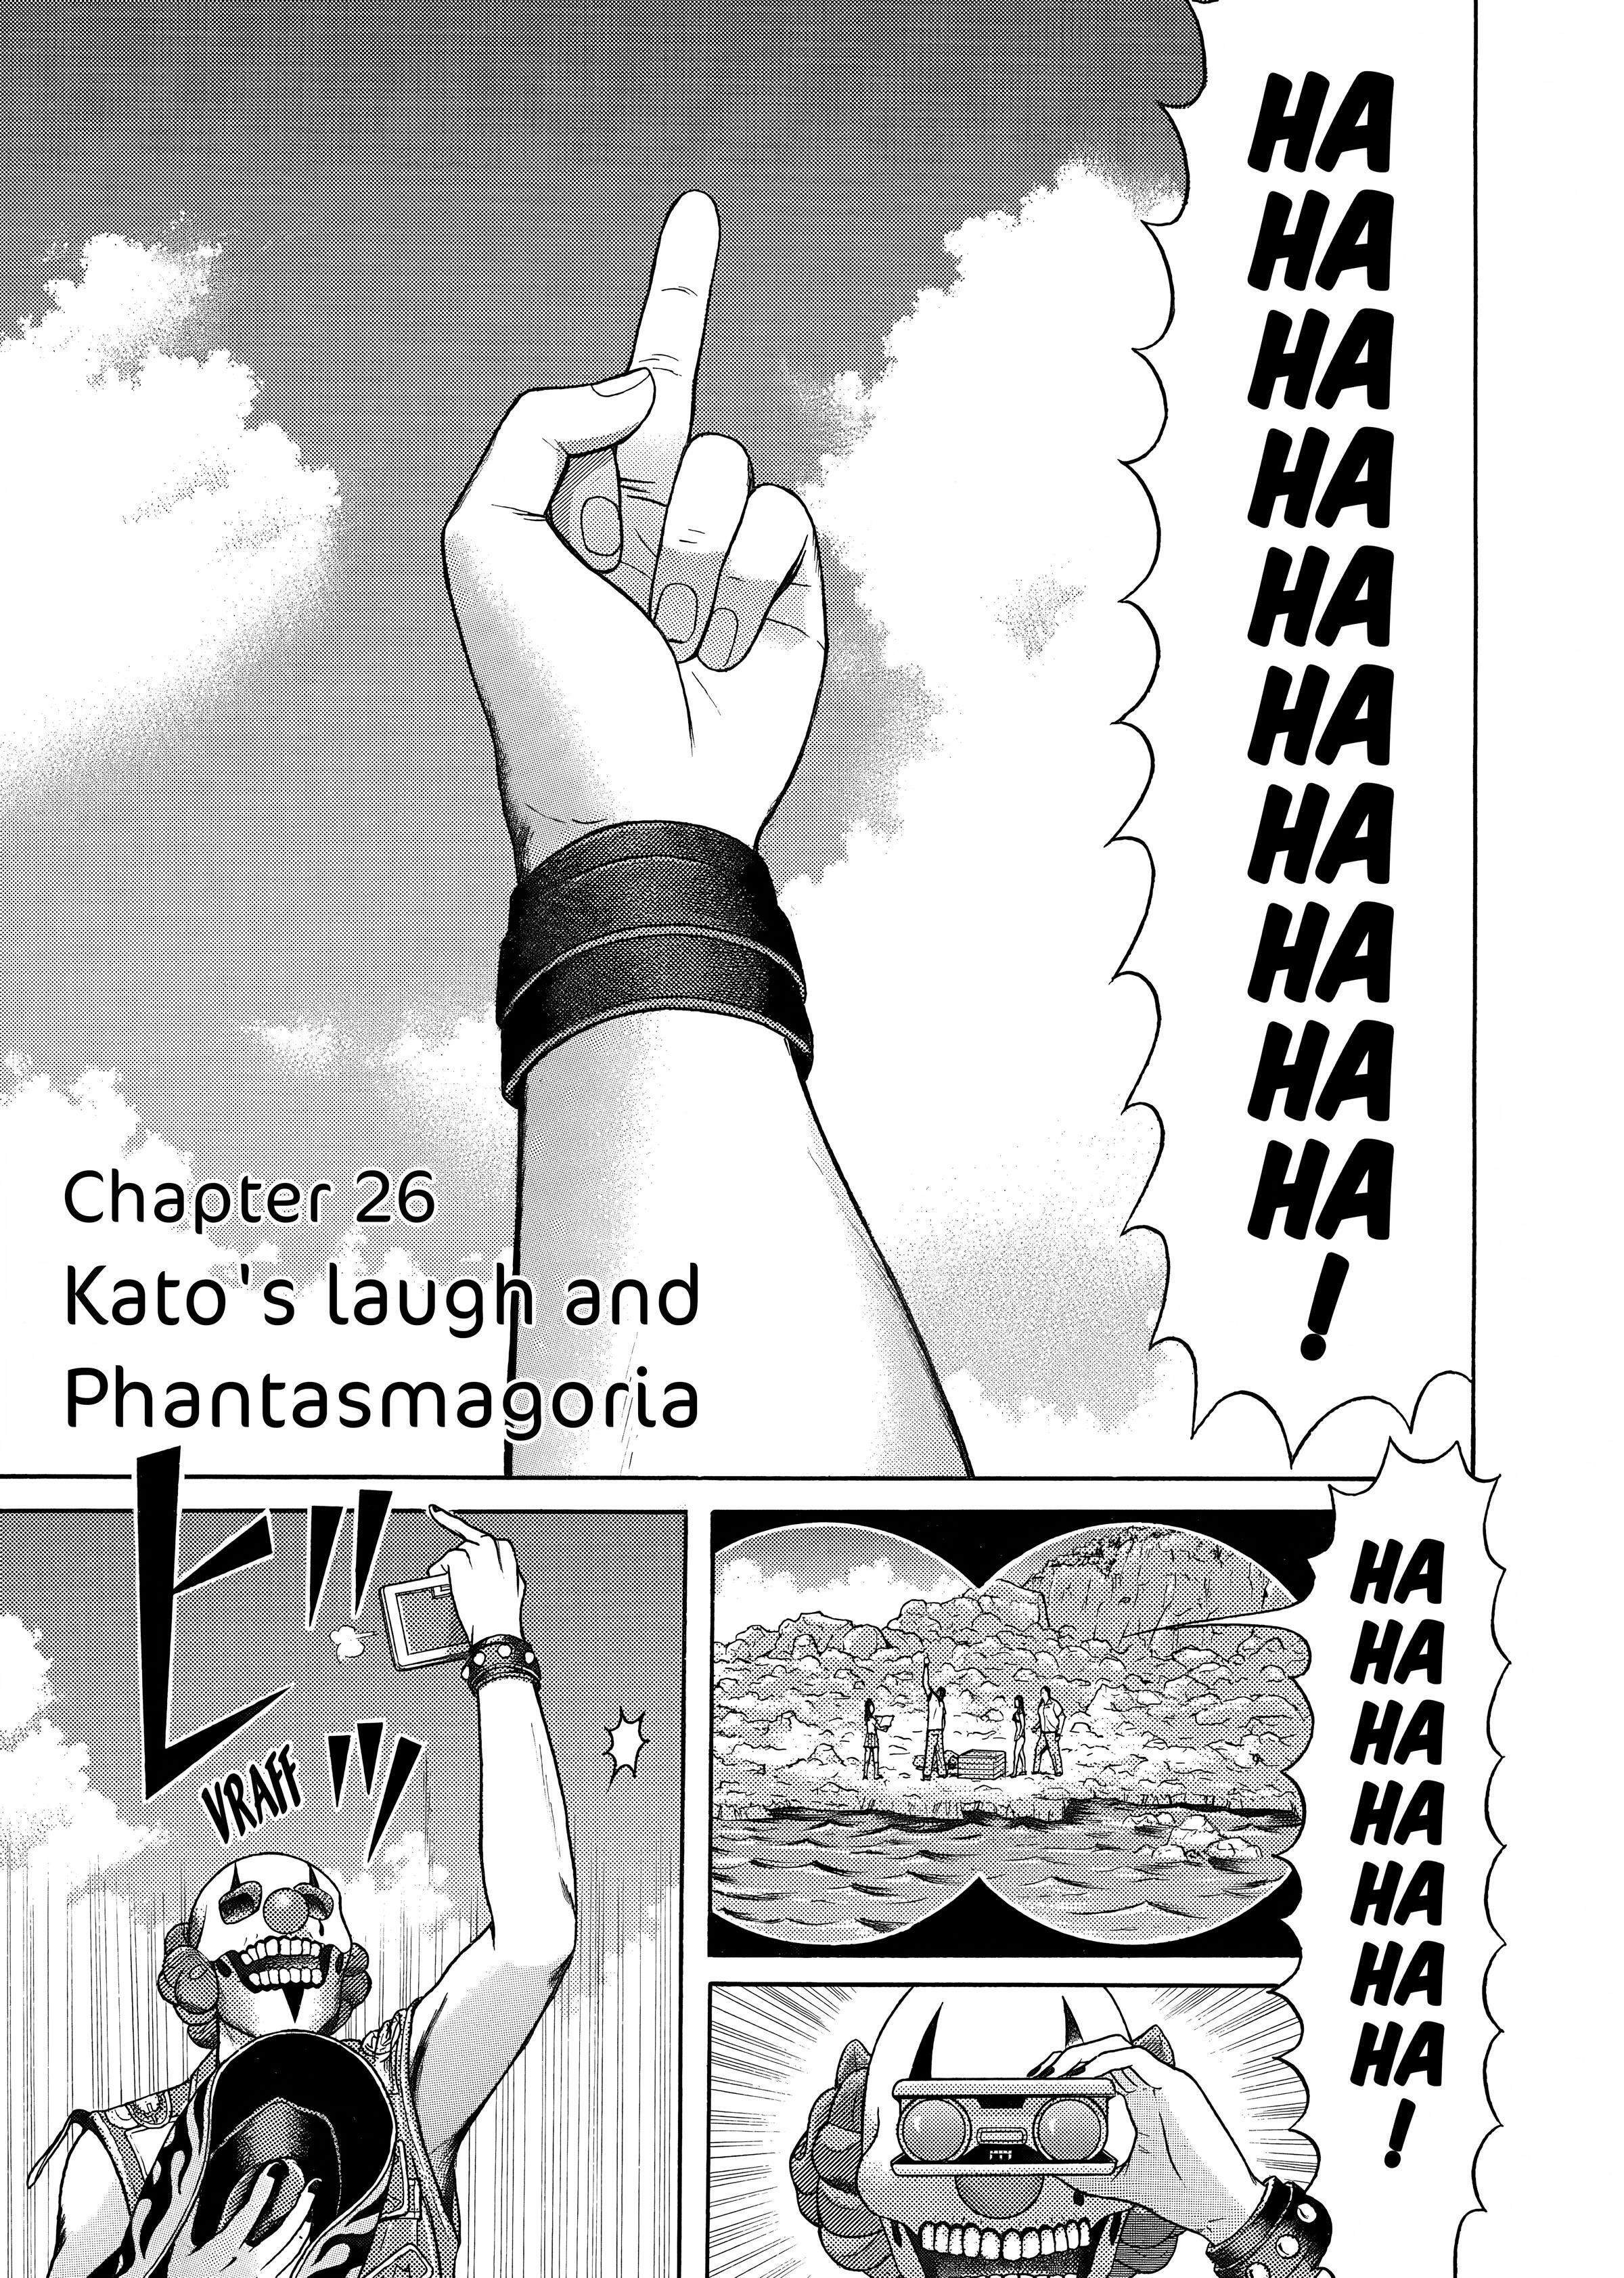 One Punch-Man Capítulo 28.5 - Manga Online